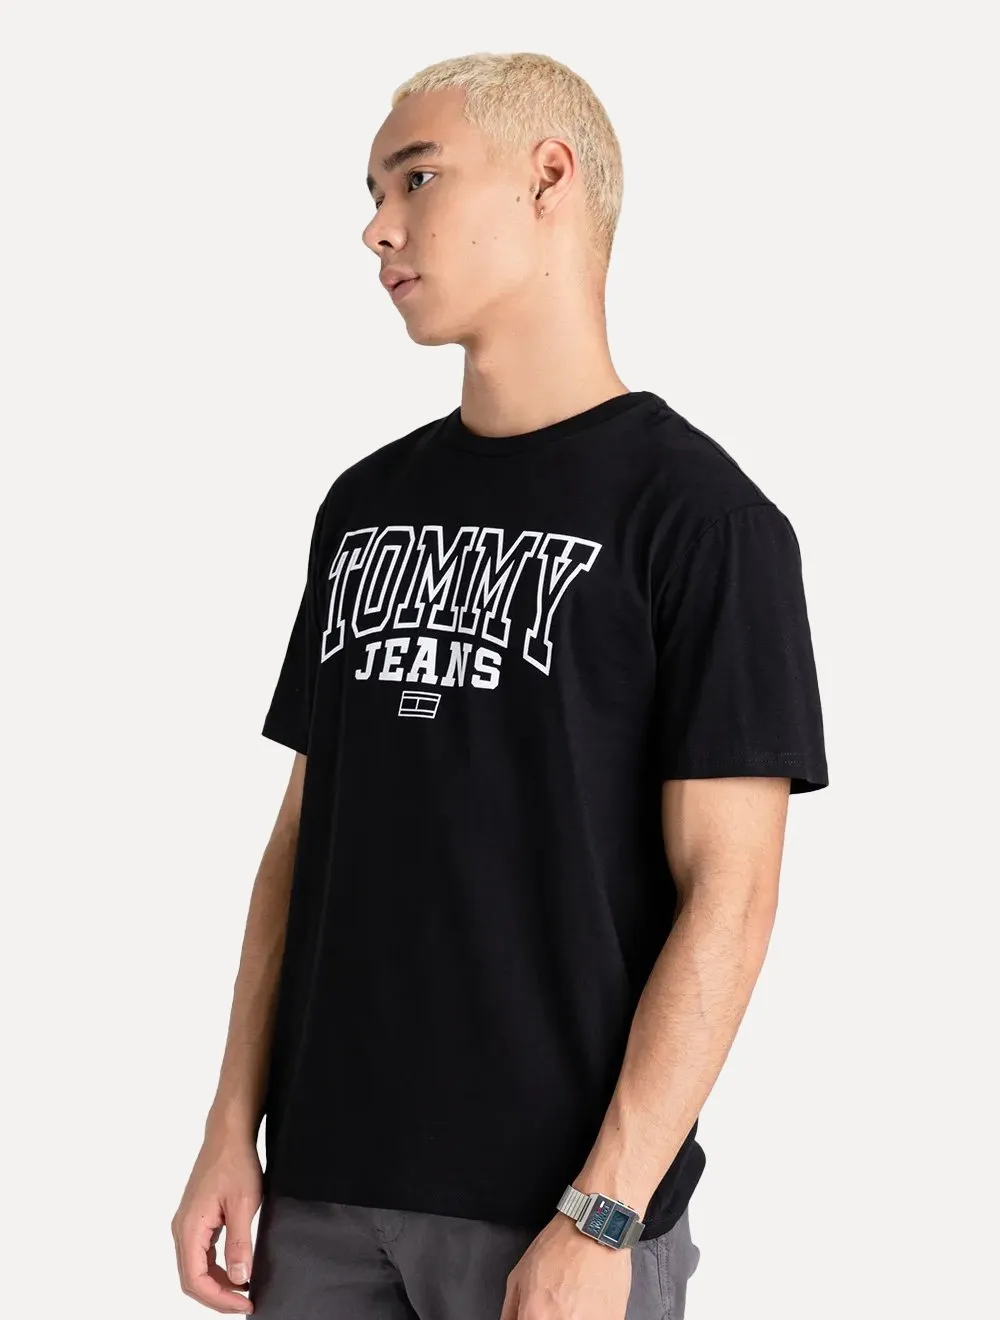 Camiseta Tommy Jeans Masculina Arc Entry Graphic Preta